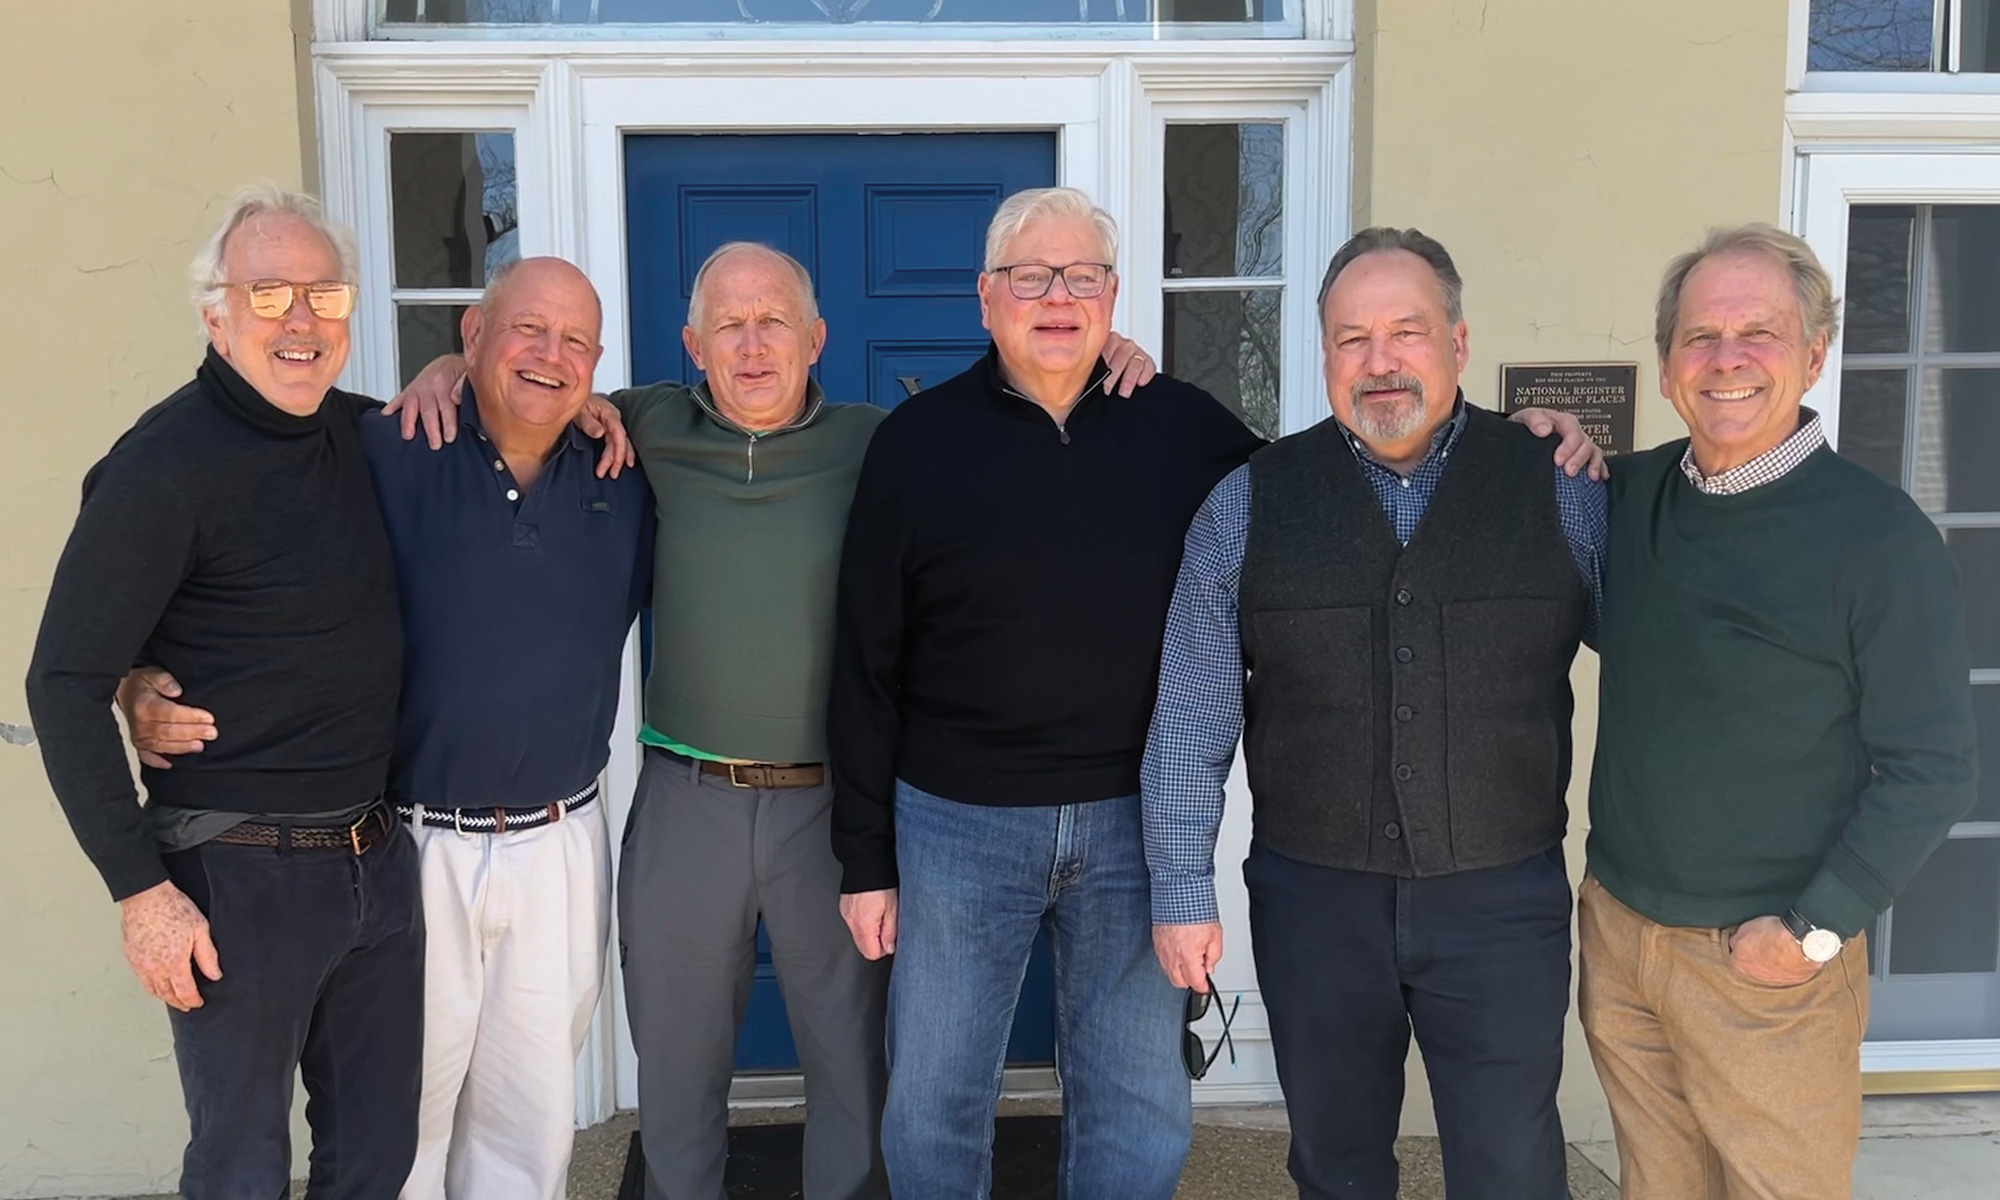 From Left to Right: Howard Fish ’78, Peter Sparks ’78, Hunter Nickell ’78, Steve Pisanelli ’78, Tony Padgett ’78, David Crouse ’77